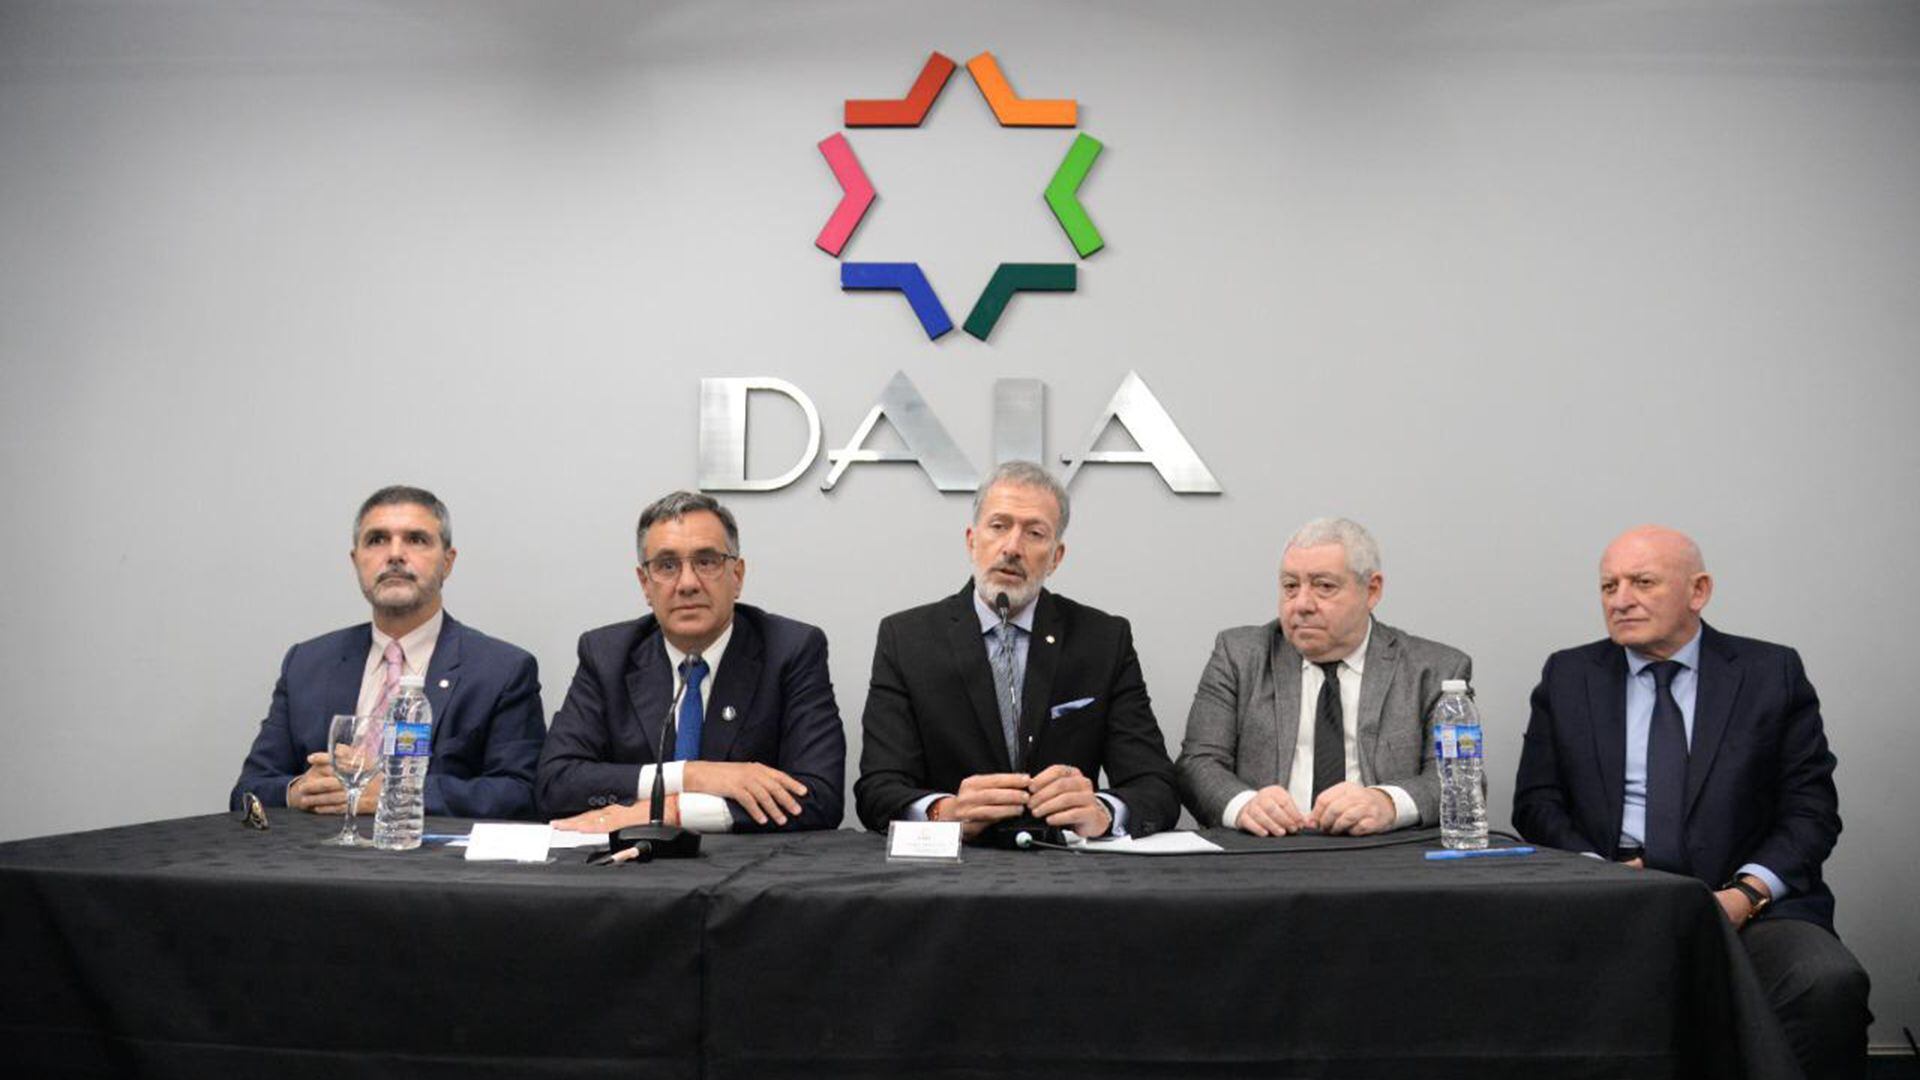 proyecto de ley DAIA - Finocchiaro